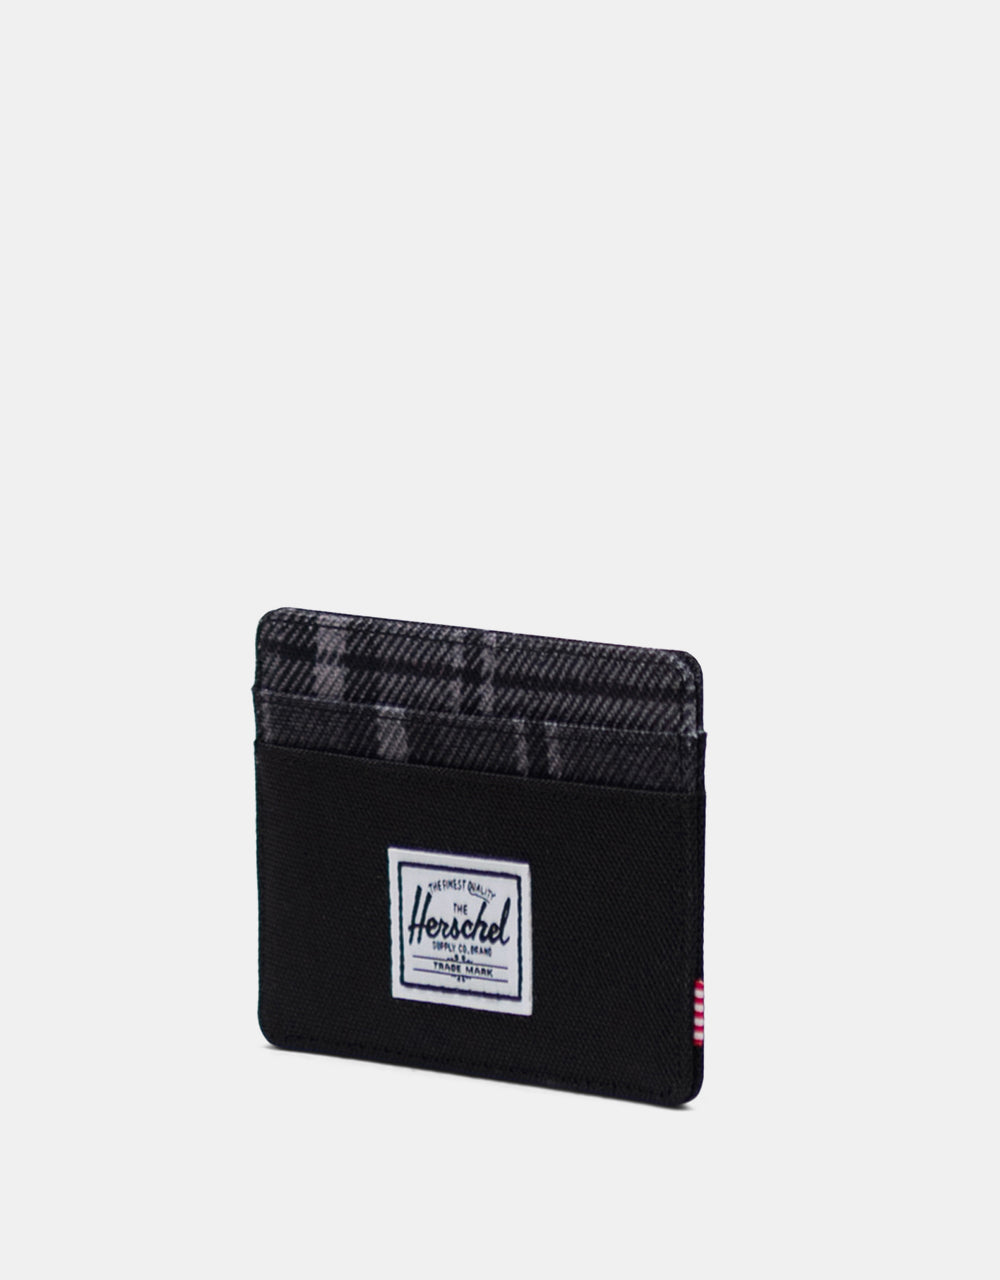 Herschel Supply Co. Charlie RFID Card Holder - Black/Grayscale Plaid